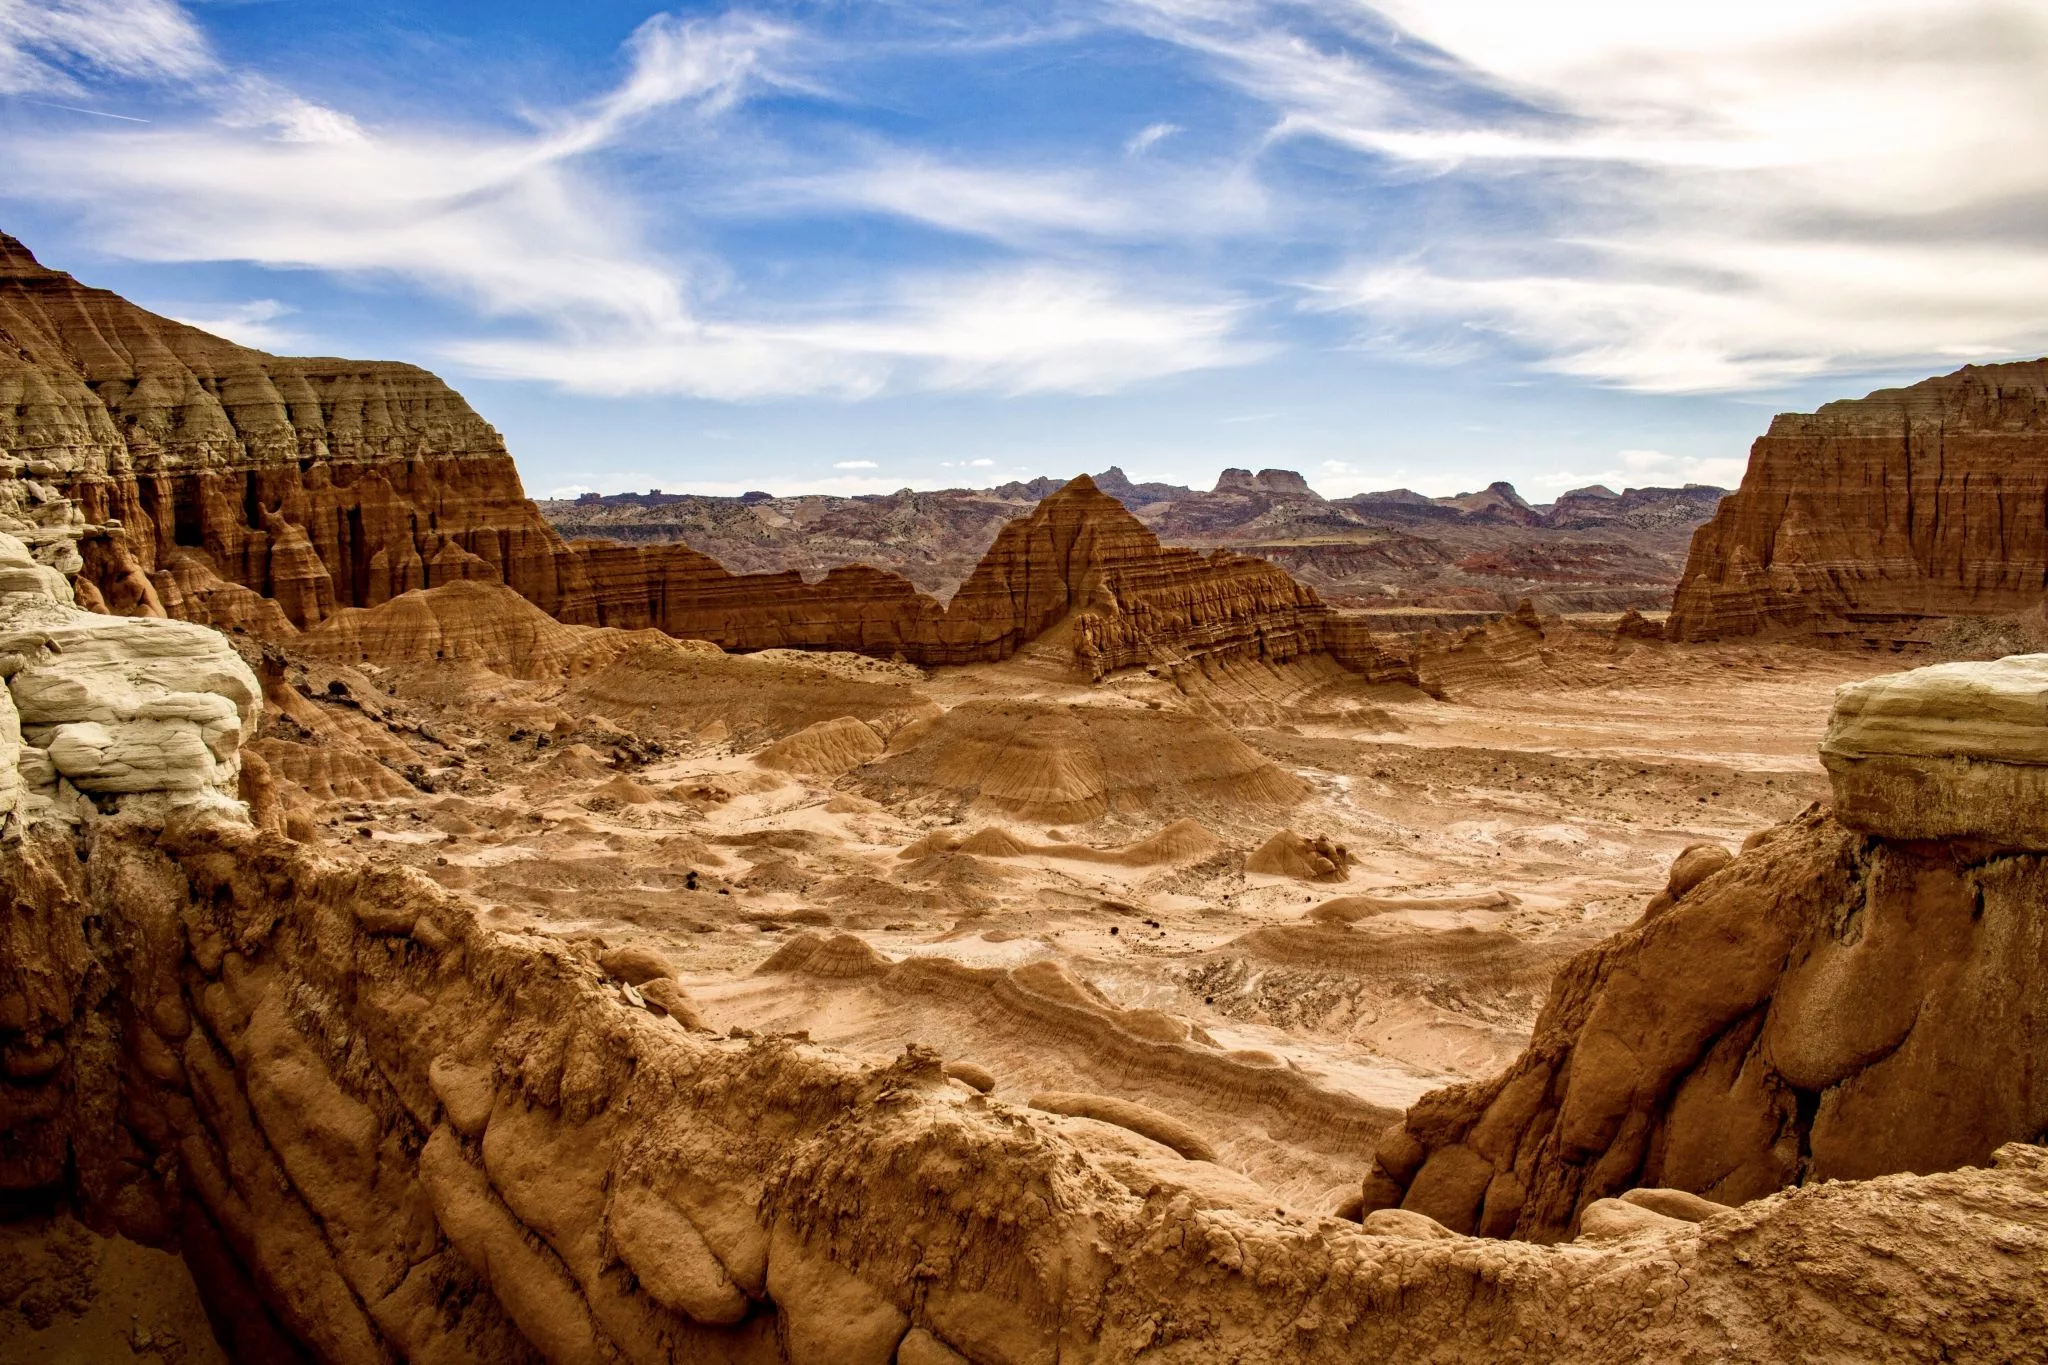 Lower South Desert Overlook, USA